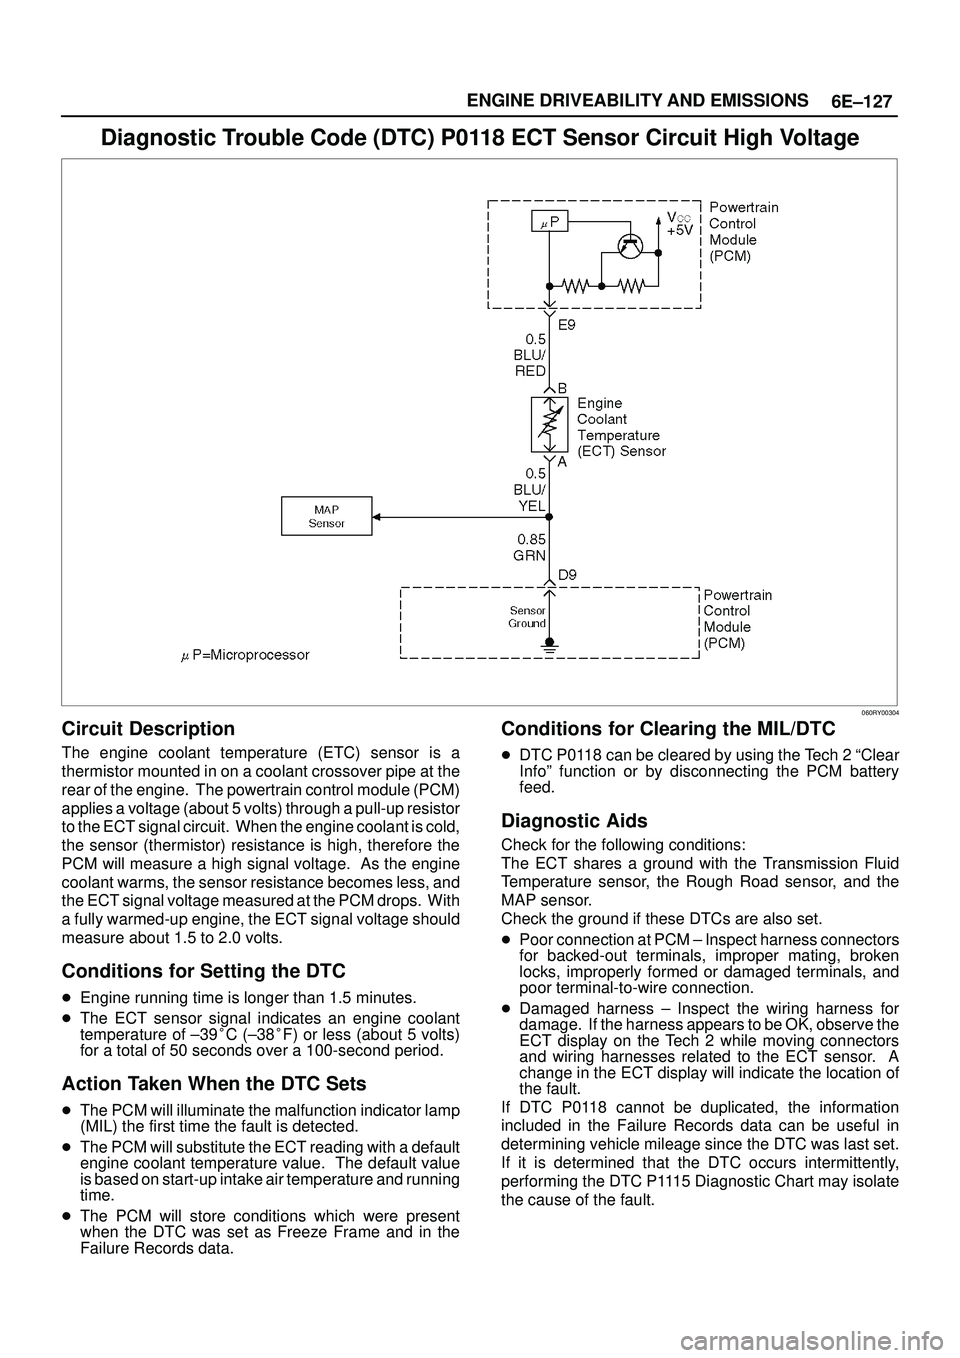 ISUZU TROOPER 1998  Service Repair Manual 6E±127 ENGINE DRIVEABILITY AND EMISSIONS
Diagnostic Trouble Code (DTC) P0118 ECT Sensor Circuit High Voltage
060RY00304
Circuit Description
The engine coolant temperature (ETC) sensor is a
thermistor